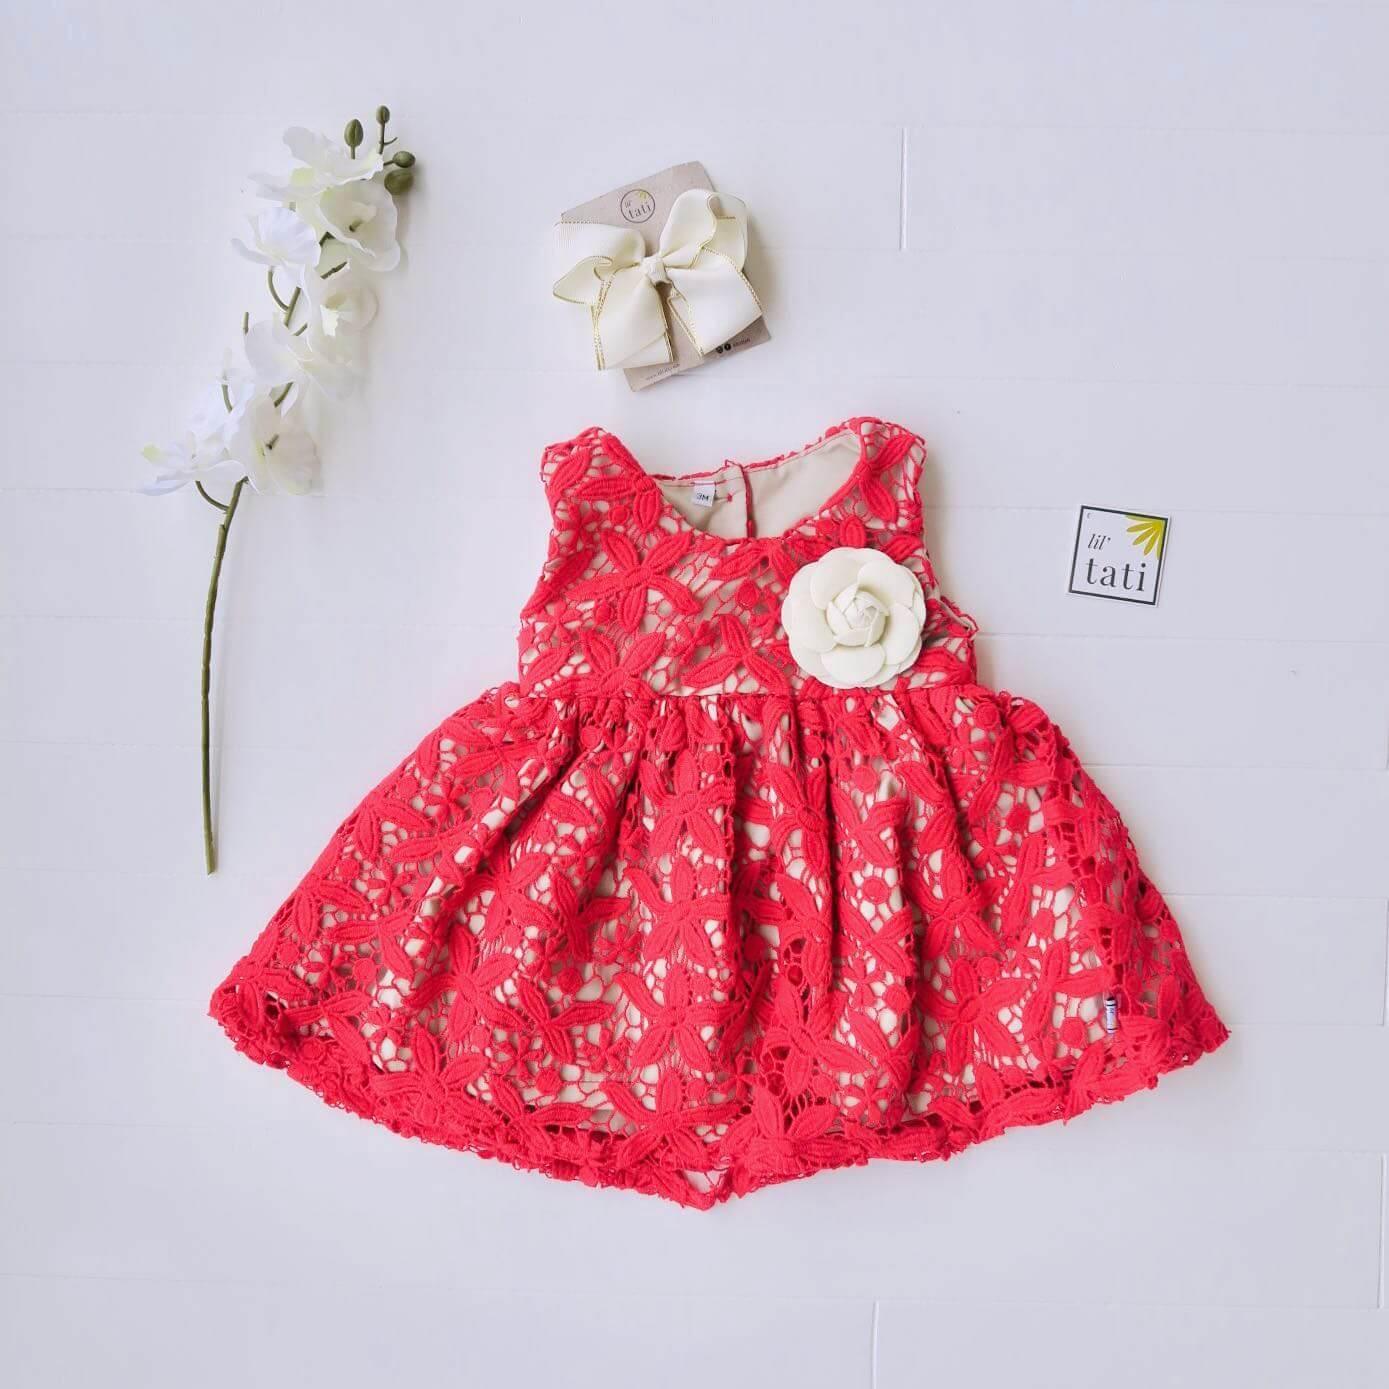 Iris Dress in Red Daisy Cotton Lace - Lil' Tati